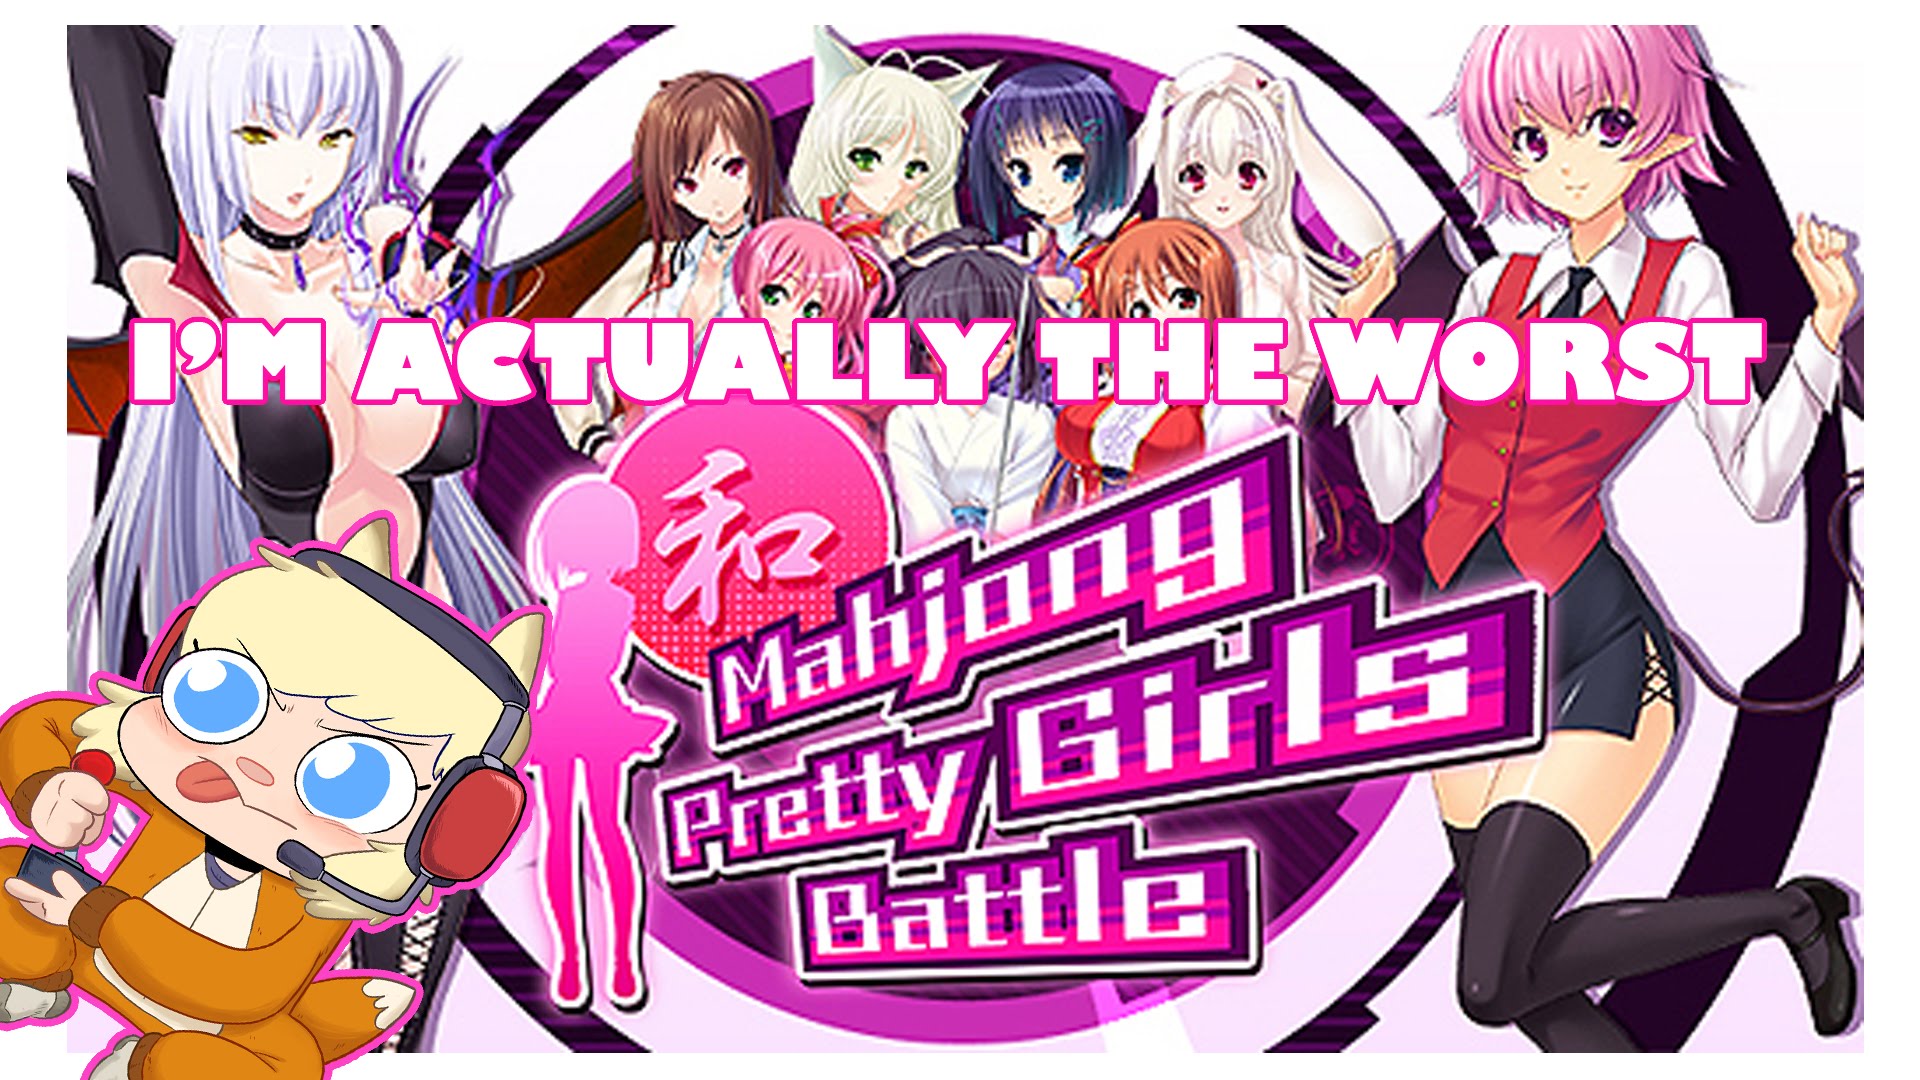 Mahjong Pretty Girls Battle: School Girls Edition Pics, Video Game Collection